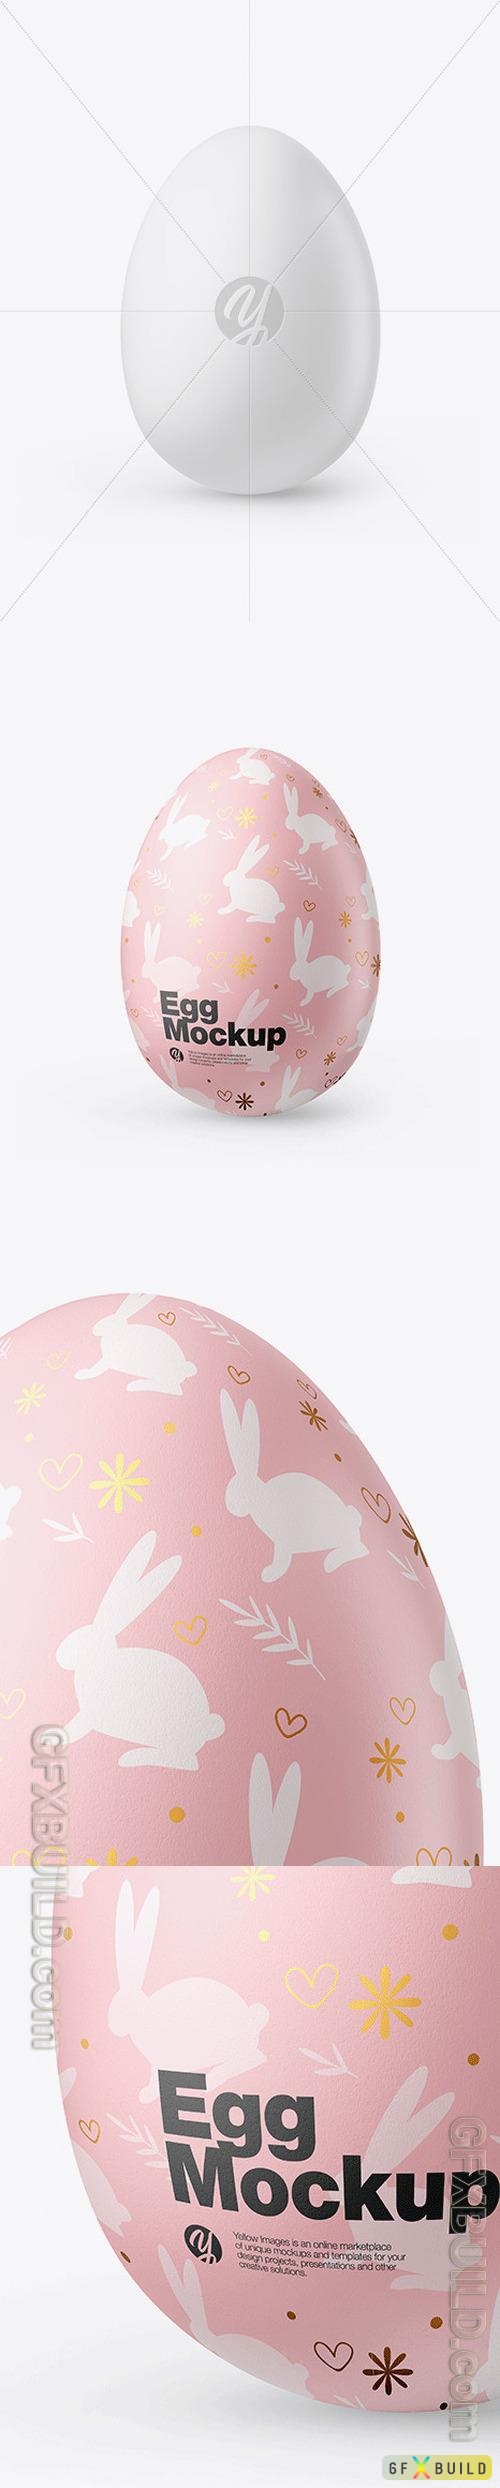 Glossy Egg Mockup 55679